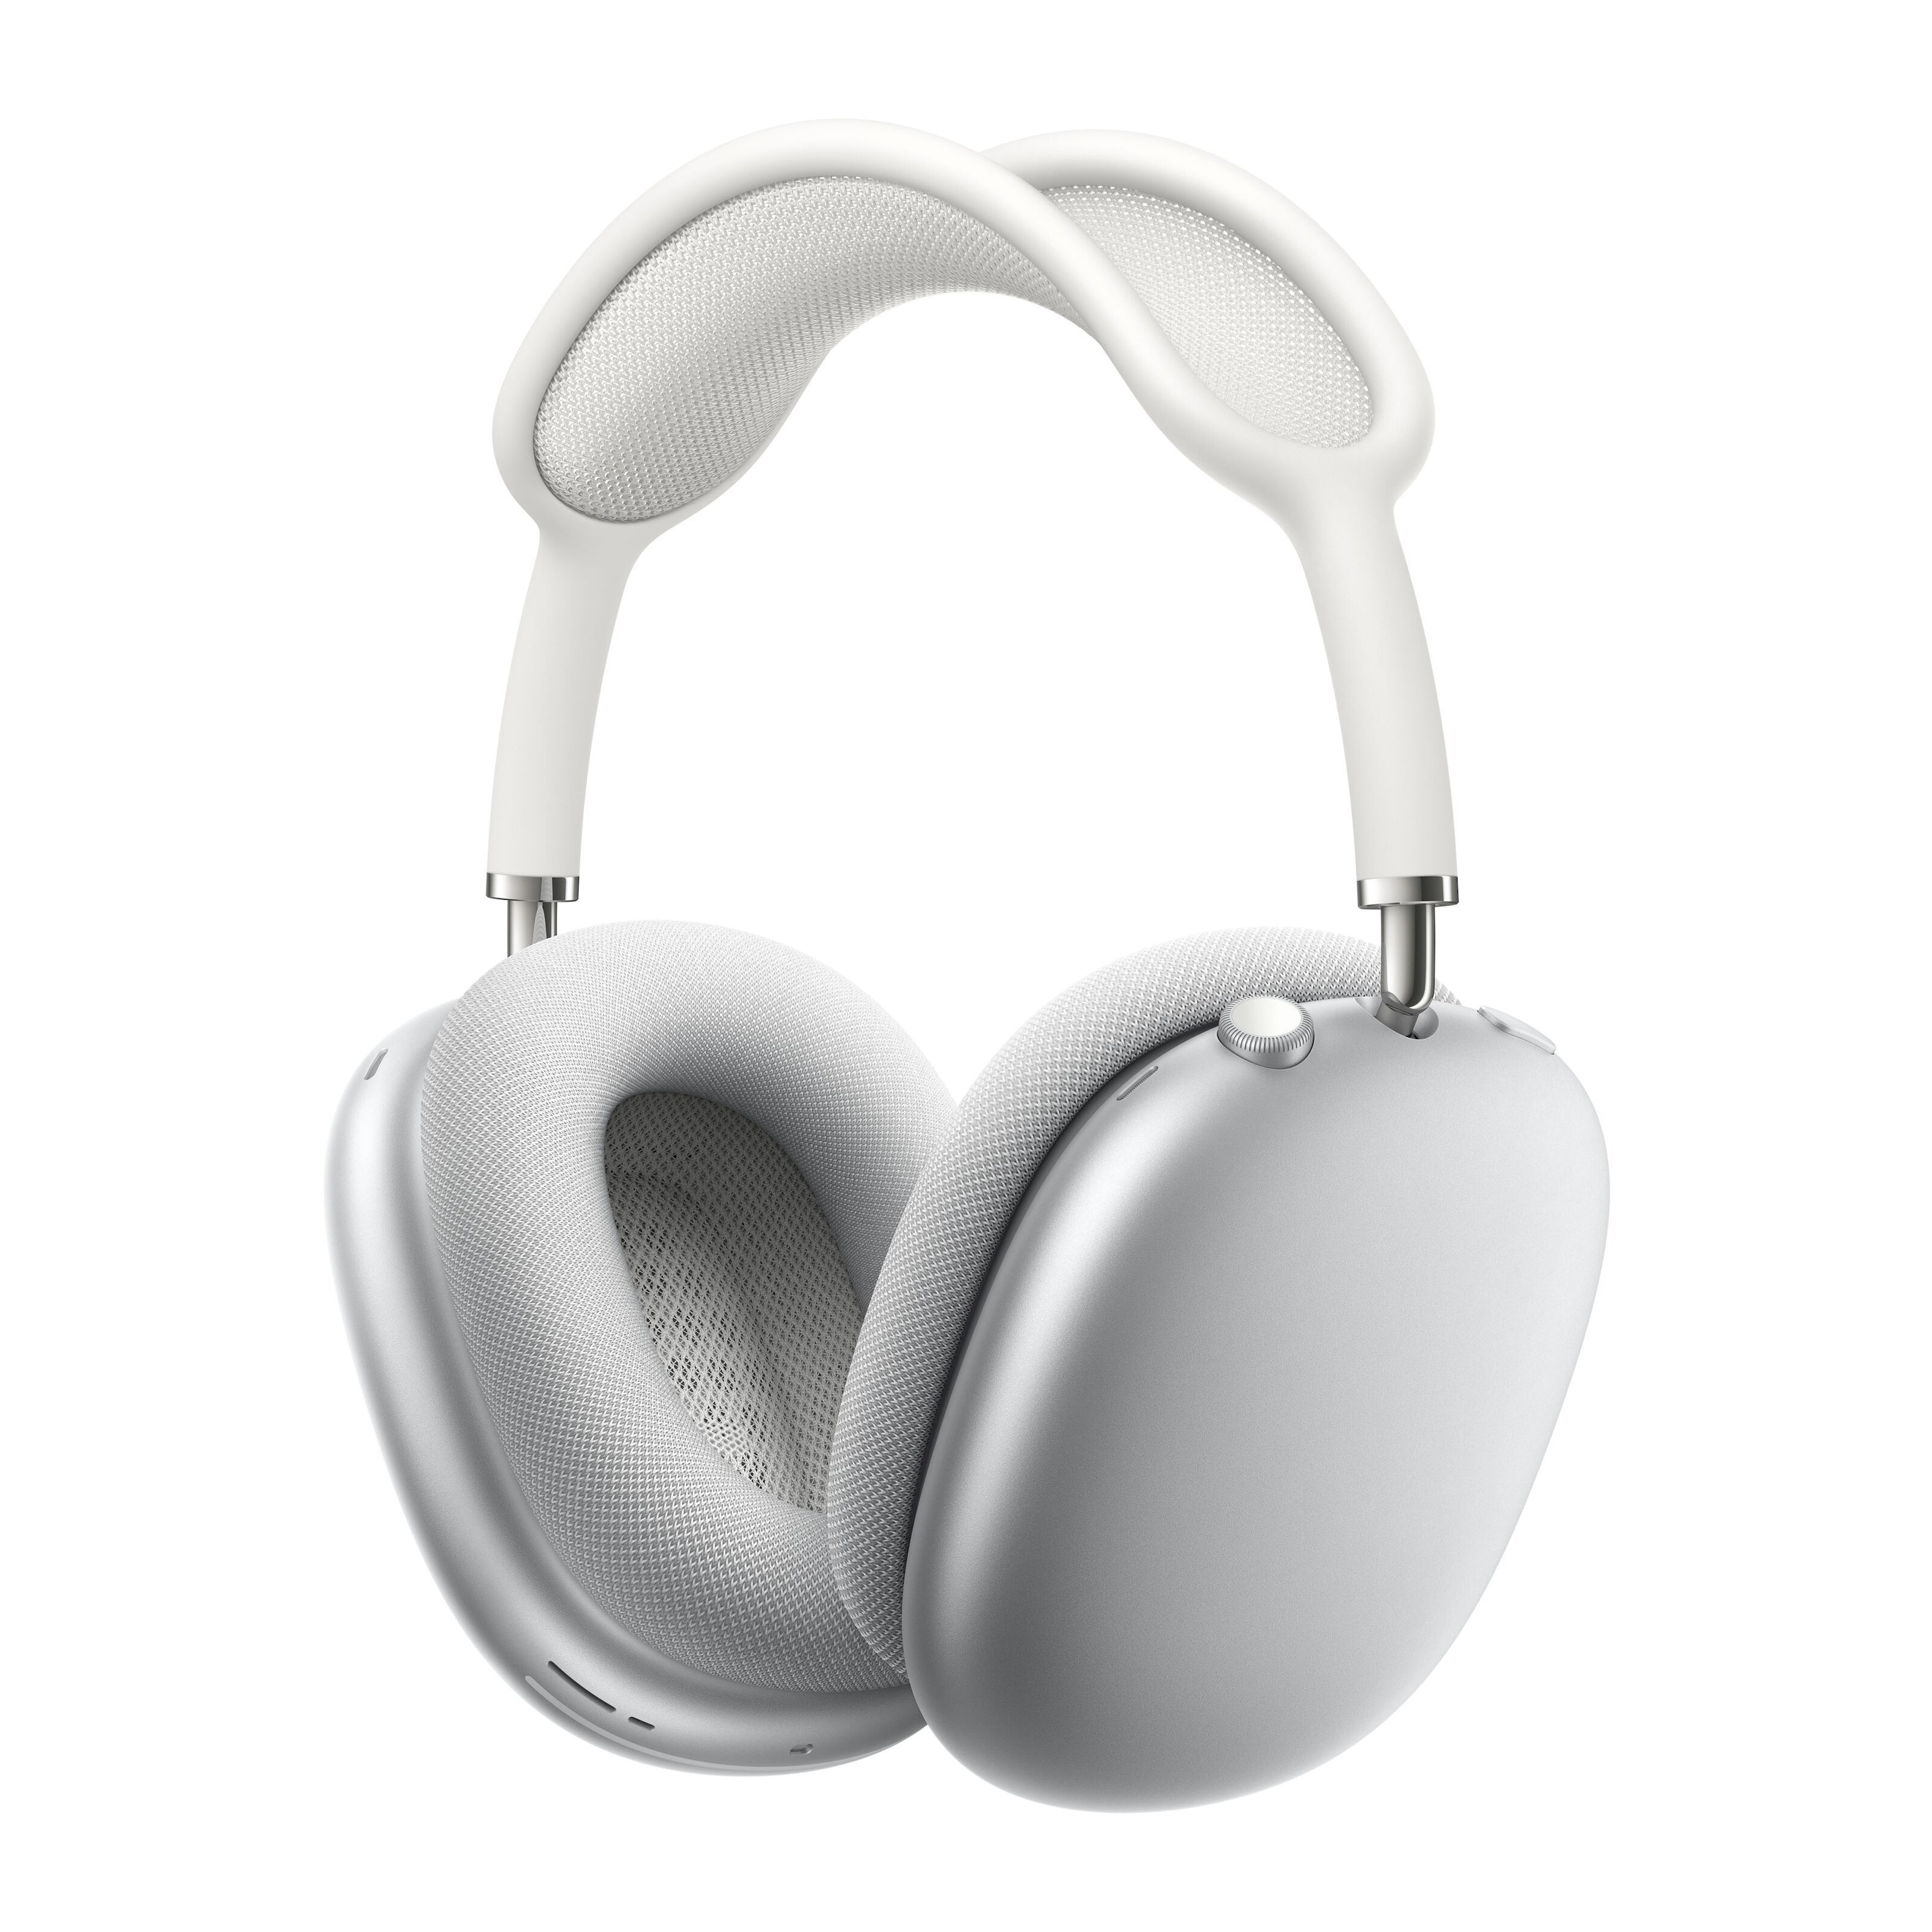 Apple Airpods Max - Bluetooth-hörlurar | Kjell.com